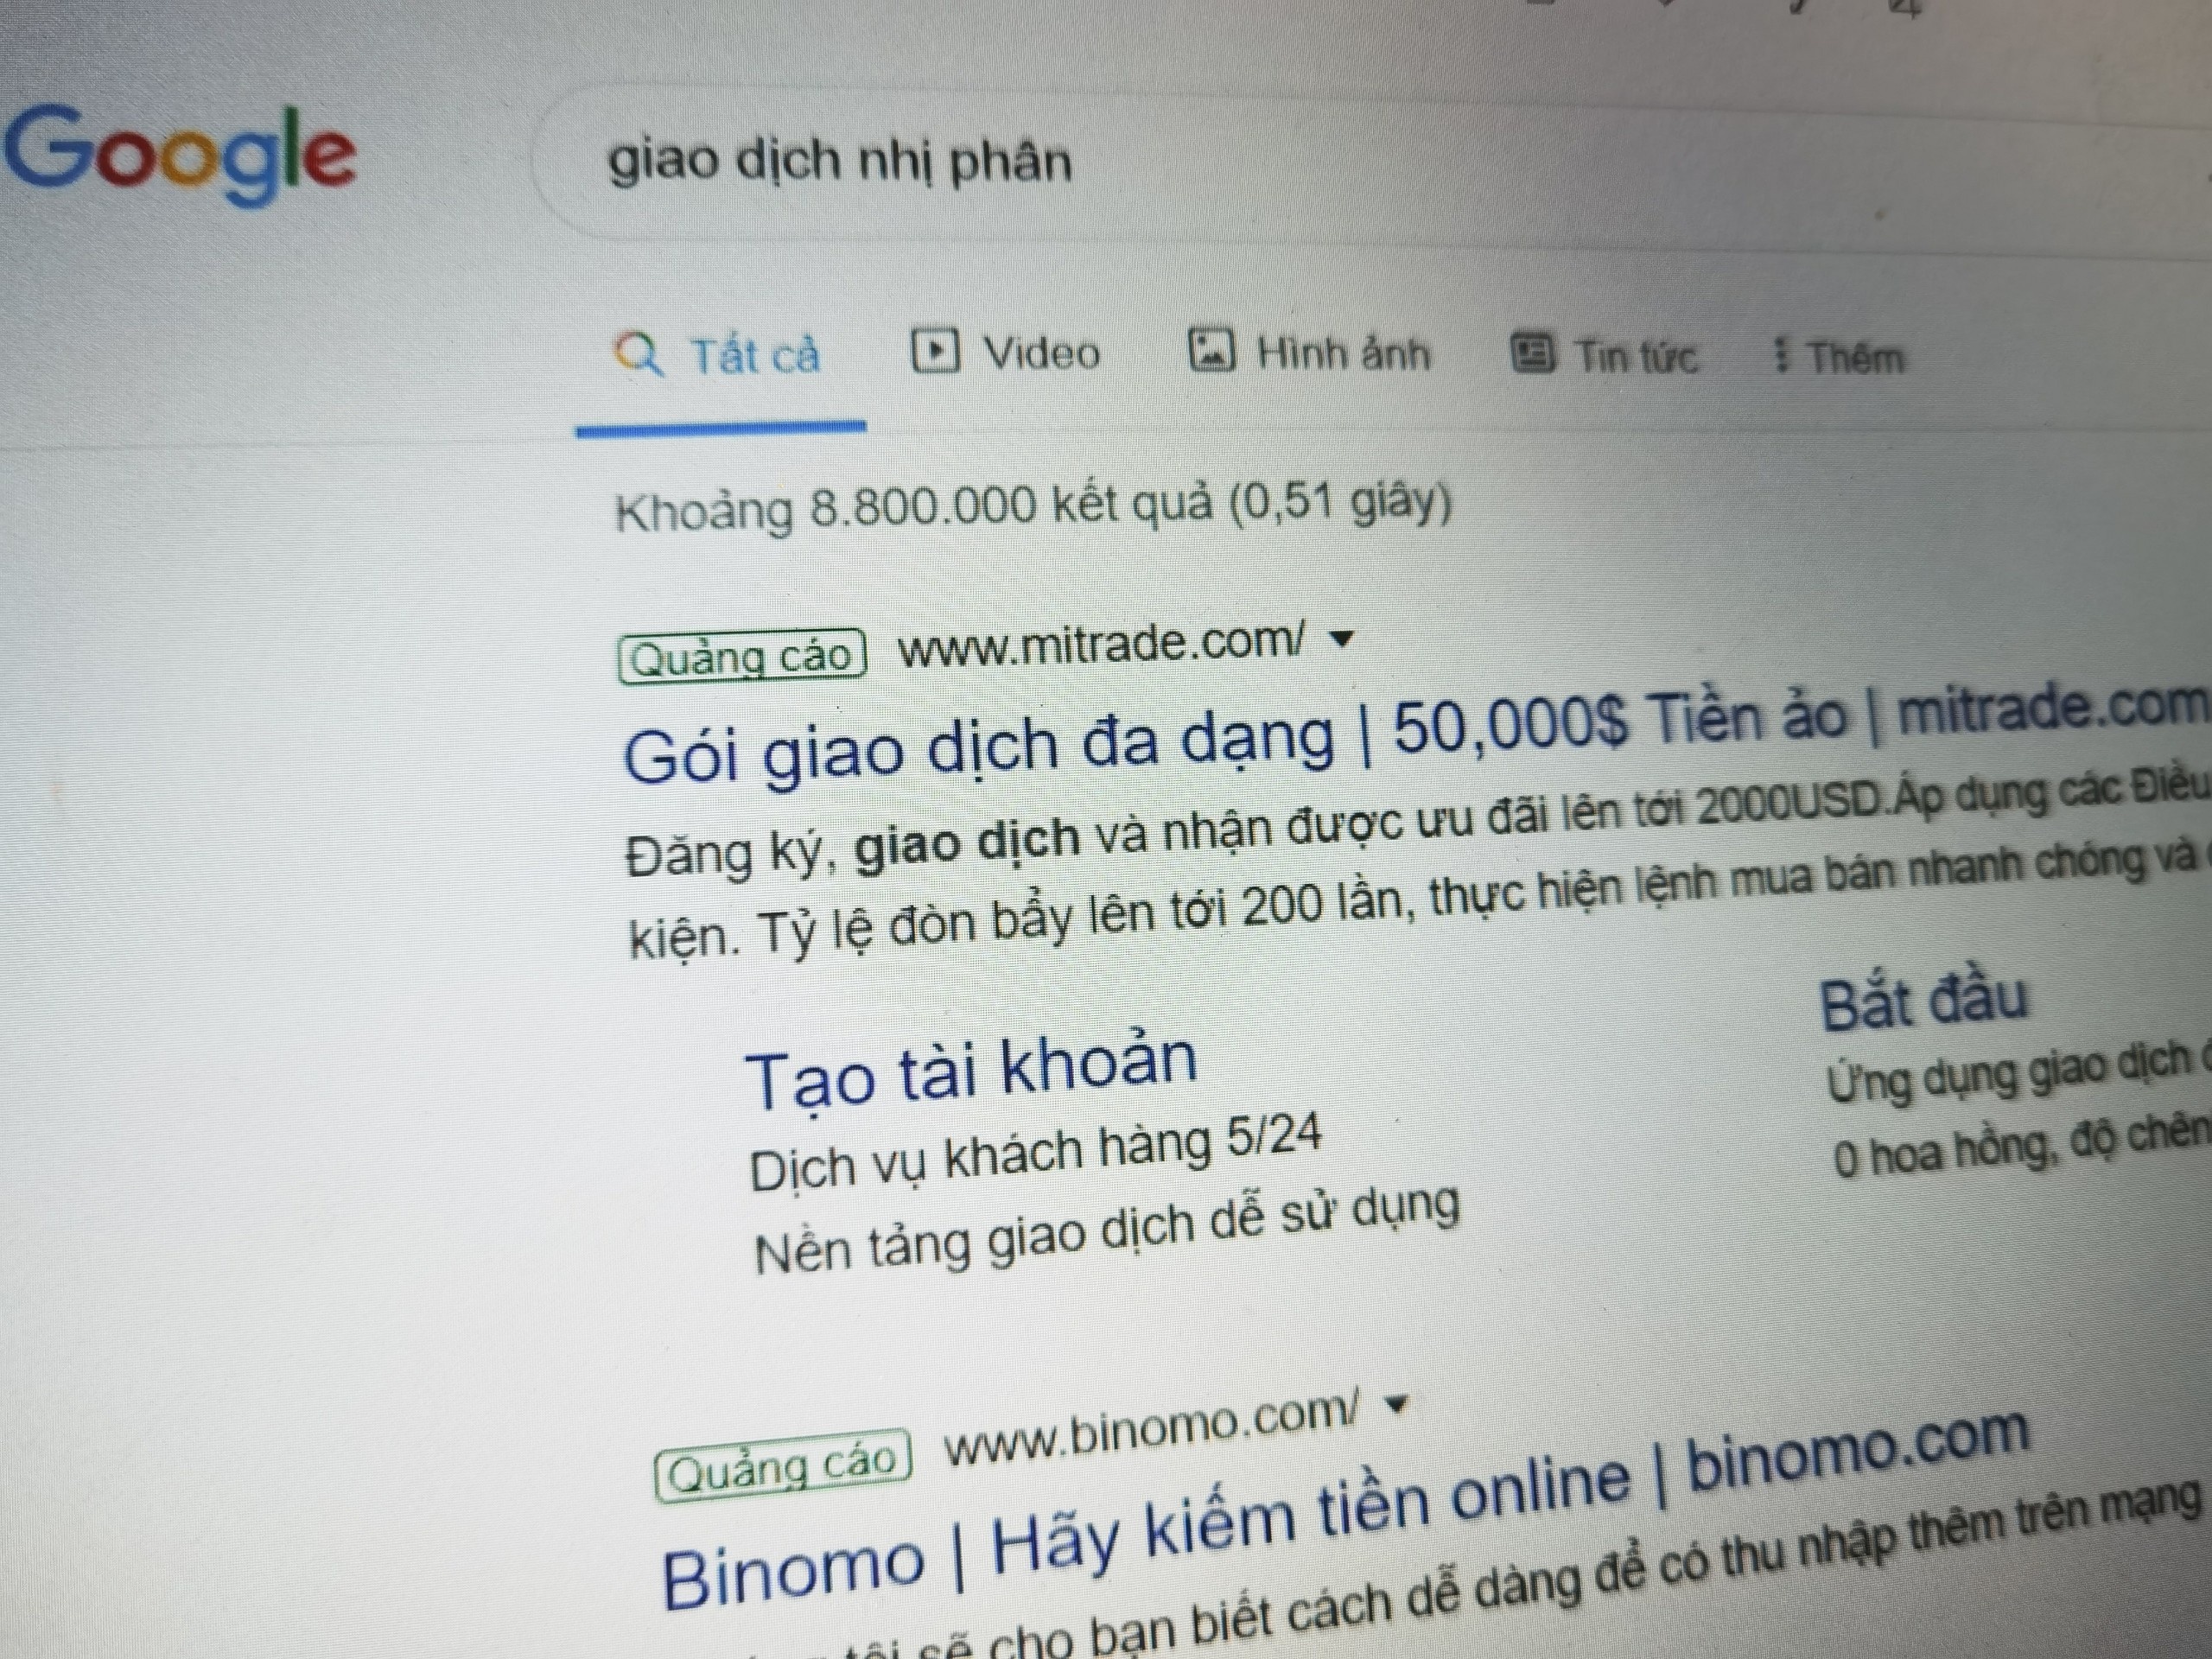 Google van quang ba cho app ca cuoc Binomo hoat dong o Viet Nam hinh anh 3 8372927d8fcc74922ddd.jpg